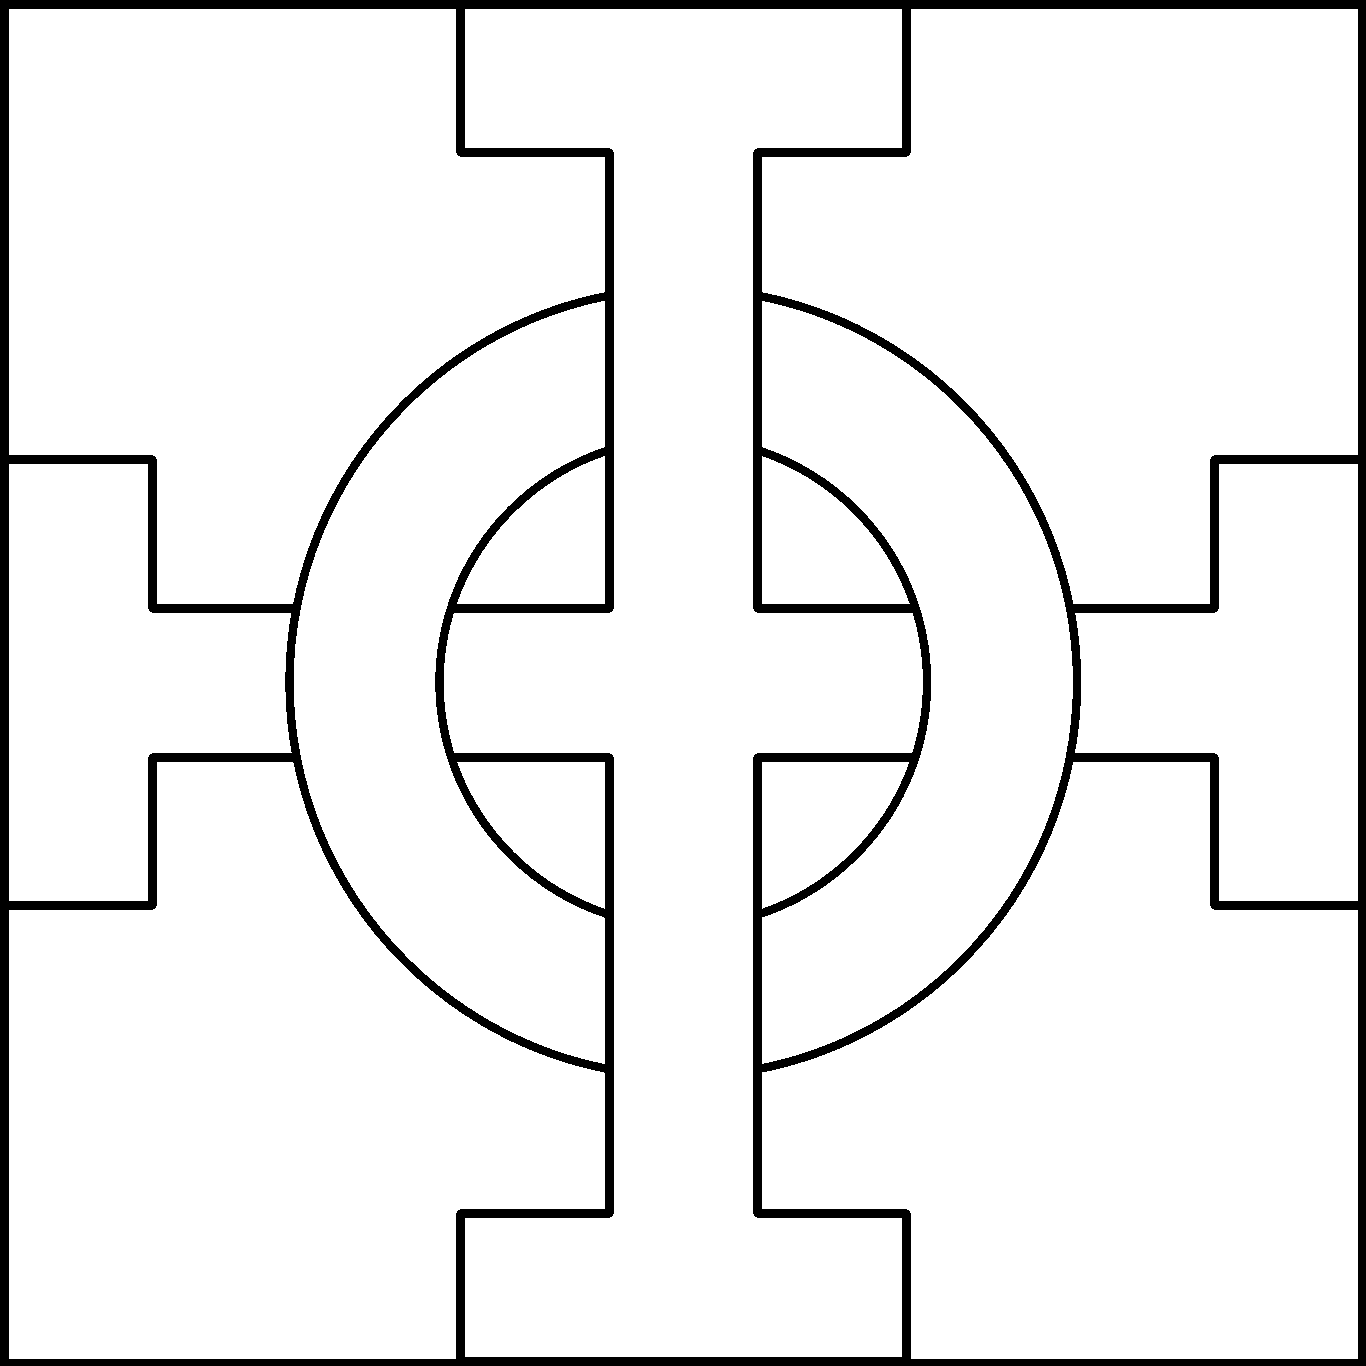 Annulet - Traceable Heraldic Art